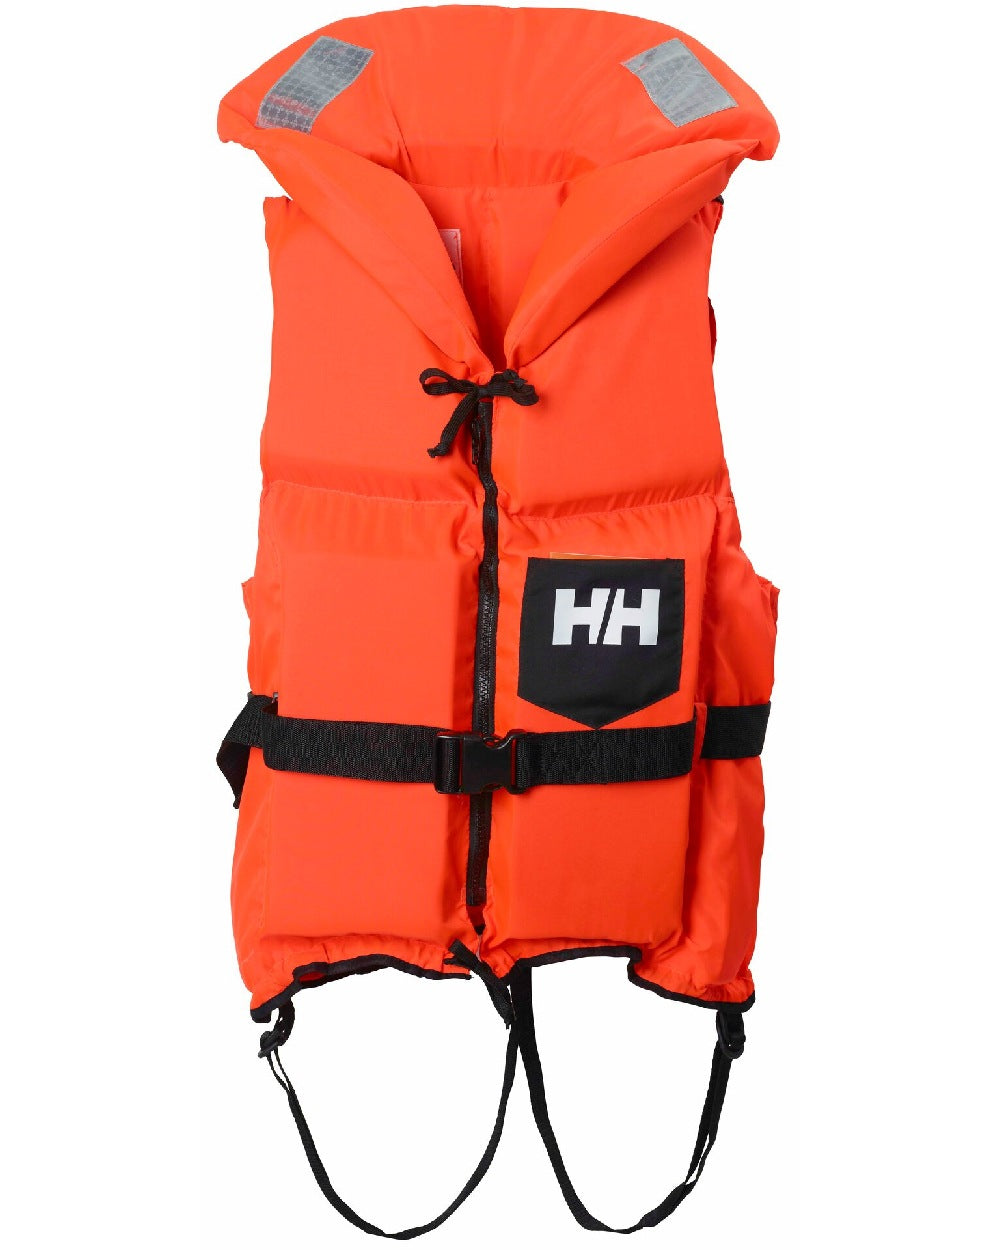 Fluor Orange coloured Helly Hansen Navigare Comfort Life Jacket on white background 